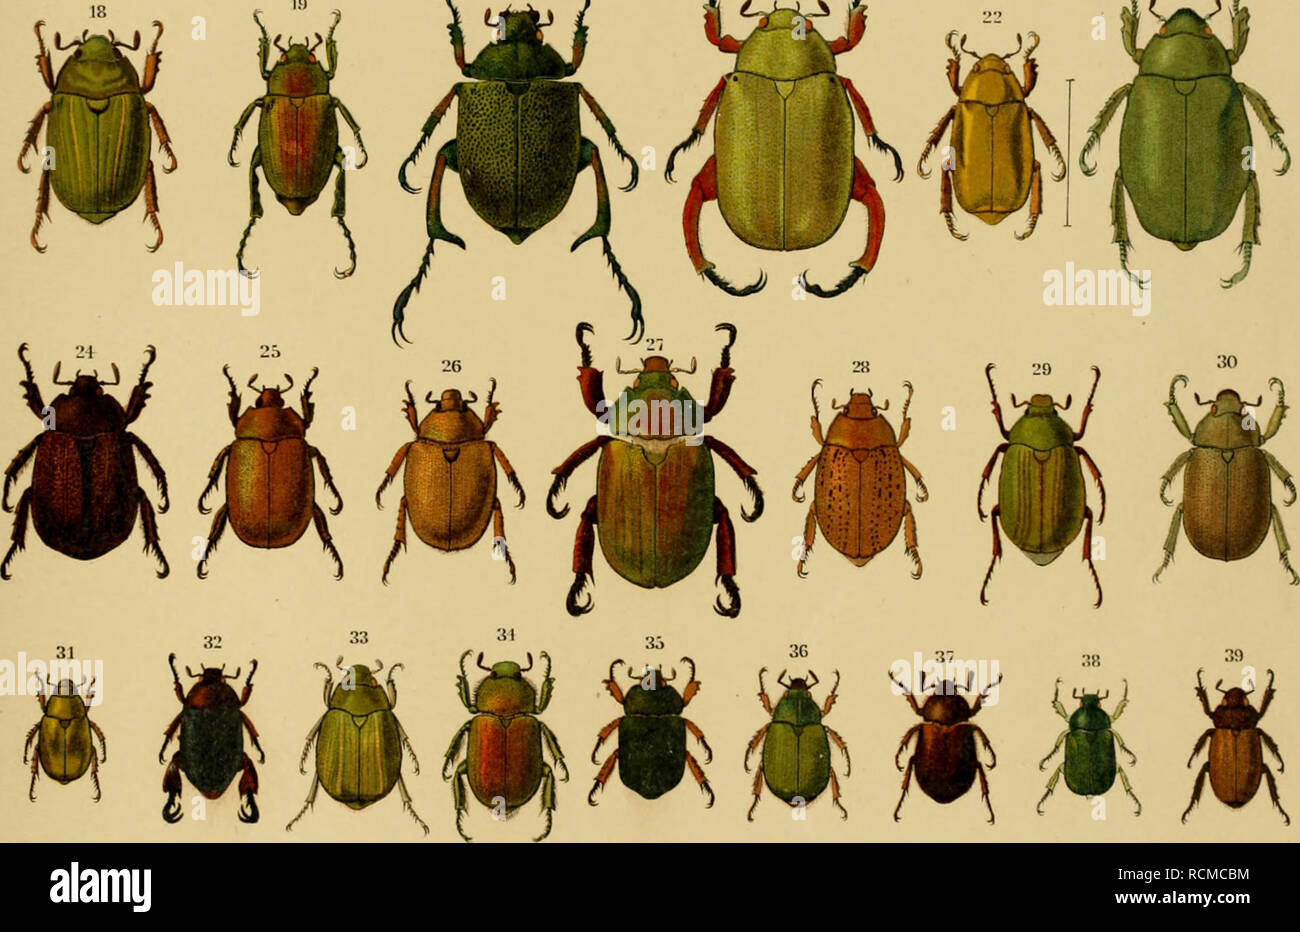 . Die exotischen Käfer in Wort und Bild. Beetles. IL' 13 H &lt; m sät A w y ^ ^ ^ 1. Chlorota hirtipes. 2. Parastasia biramosa. 3. Cnemida laeorata. 4. Rutela lineola, 5 laeta 6. Chalcentis lauta. 7. Odontognathus Mvipennis. 8. Pelidnota pulchella, 9. bivittala, 10. litmella, 11. punctata, 12. vireecans, 13. cyanipes. 14. Aglyptoptera Burmeisteri. 15. Pelidn. aeruginosa. 16. Aglypt sumptuoaa. 17. Plusiotis Lecontei, 18. Ädelaida. 19. Chalcoplethis Kirl.yi. 20. Chrysophora ohrysoohlora. 21. Chrysina mat-ropus. 22. Plus, resplendens. 23. Chrys. an na. 24. Byrsopolis castanea, 25. Axeoda Leaohi.  Stock Photo